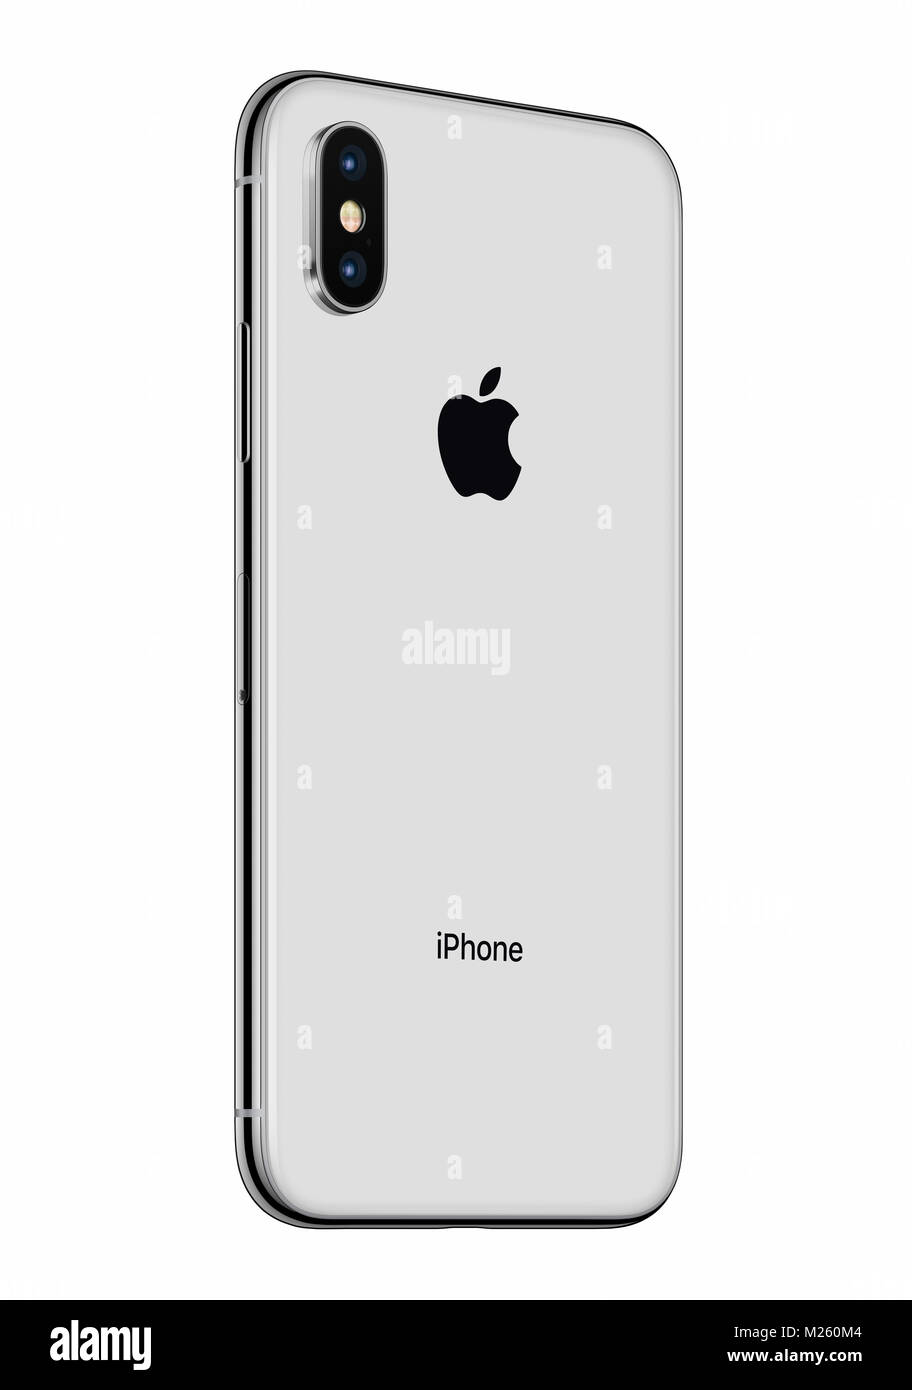 Apfel iphone 10 -Fotos und -Bildmaterial in hoher Auflösung – Alamy